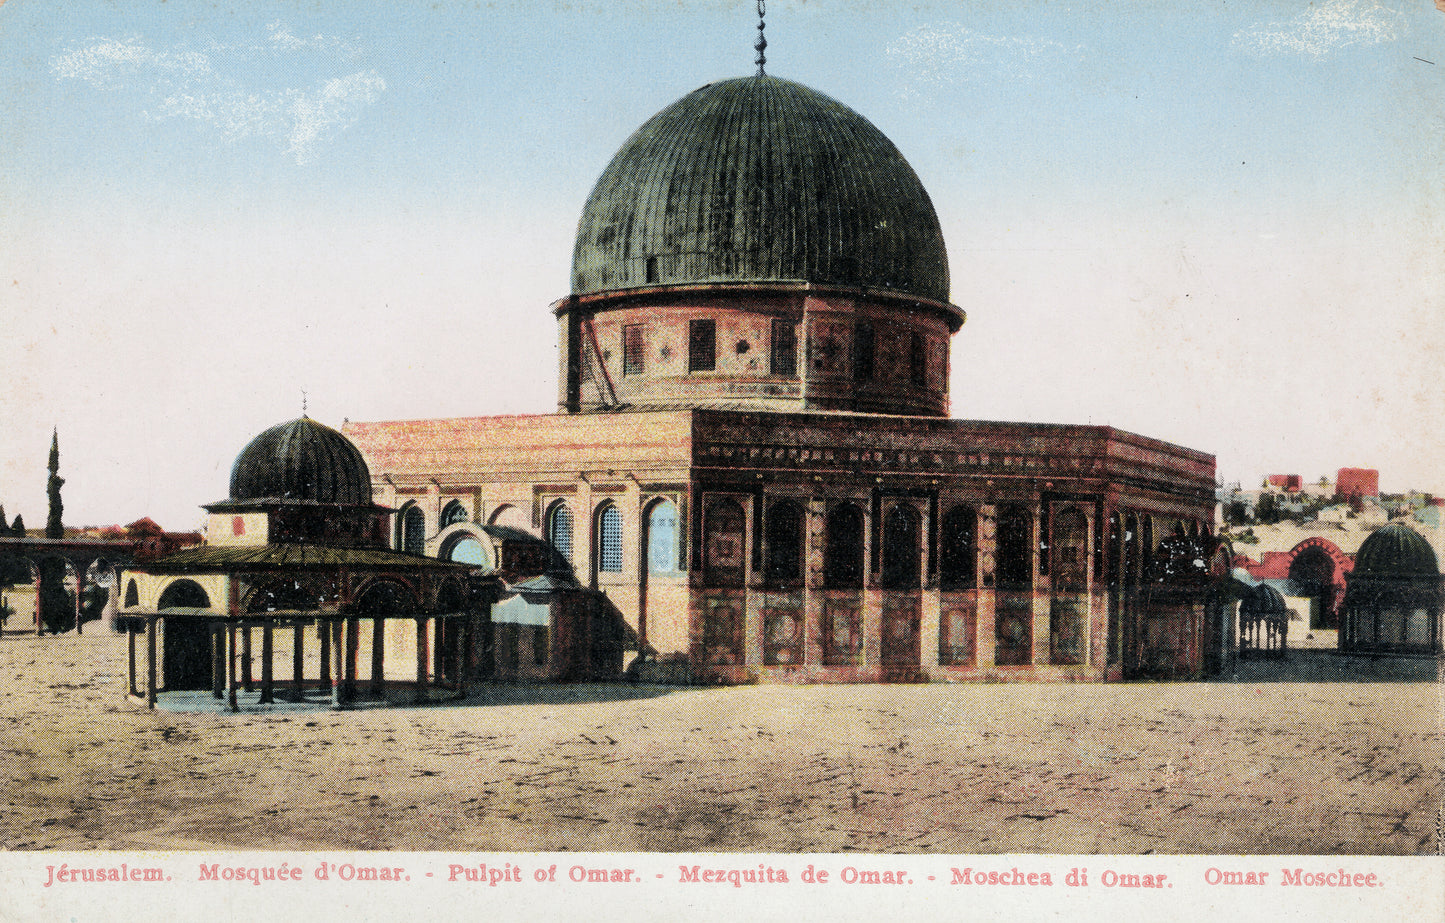 Mosque of Omar, Jerusalem